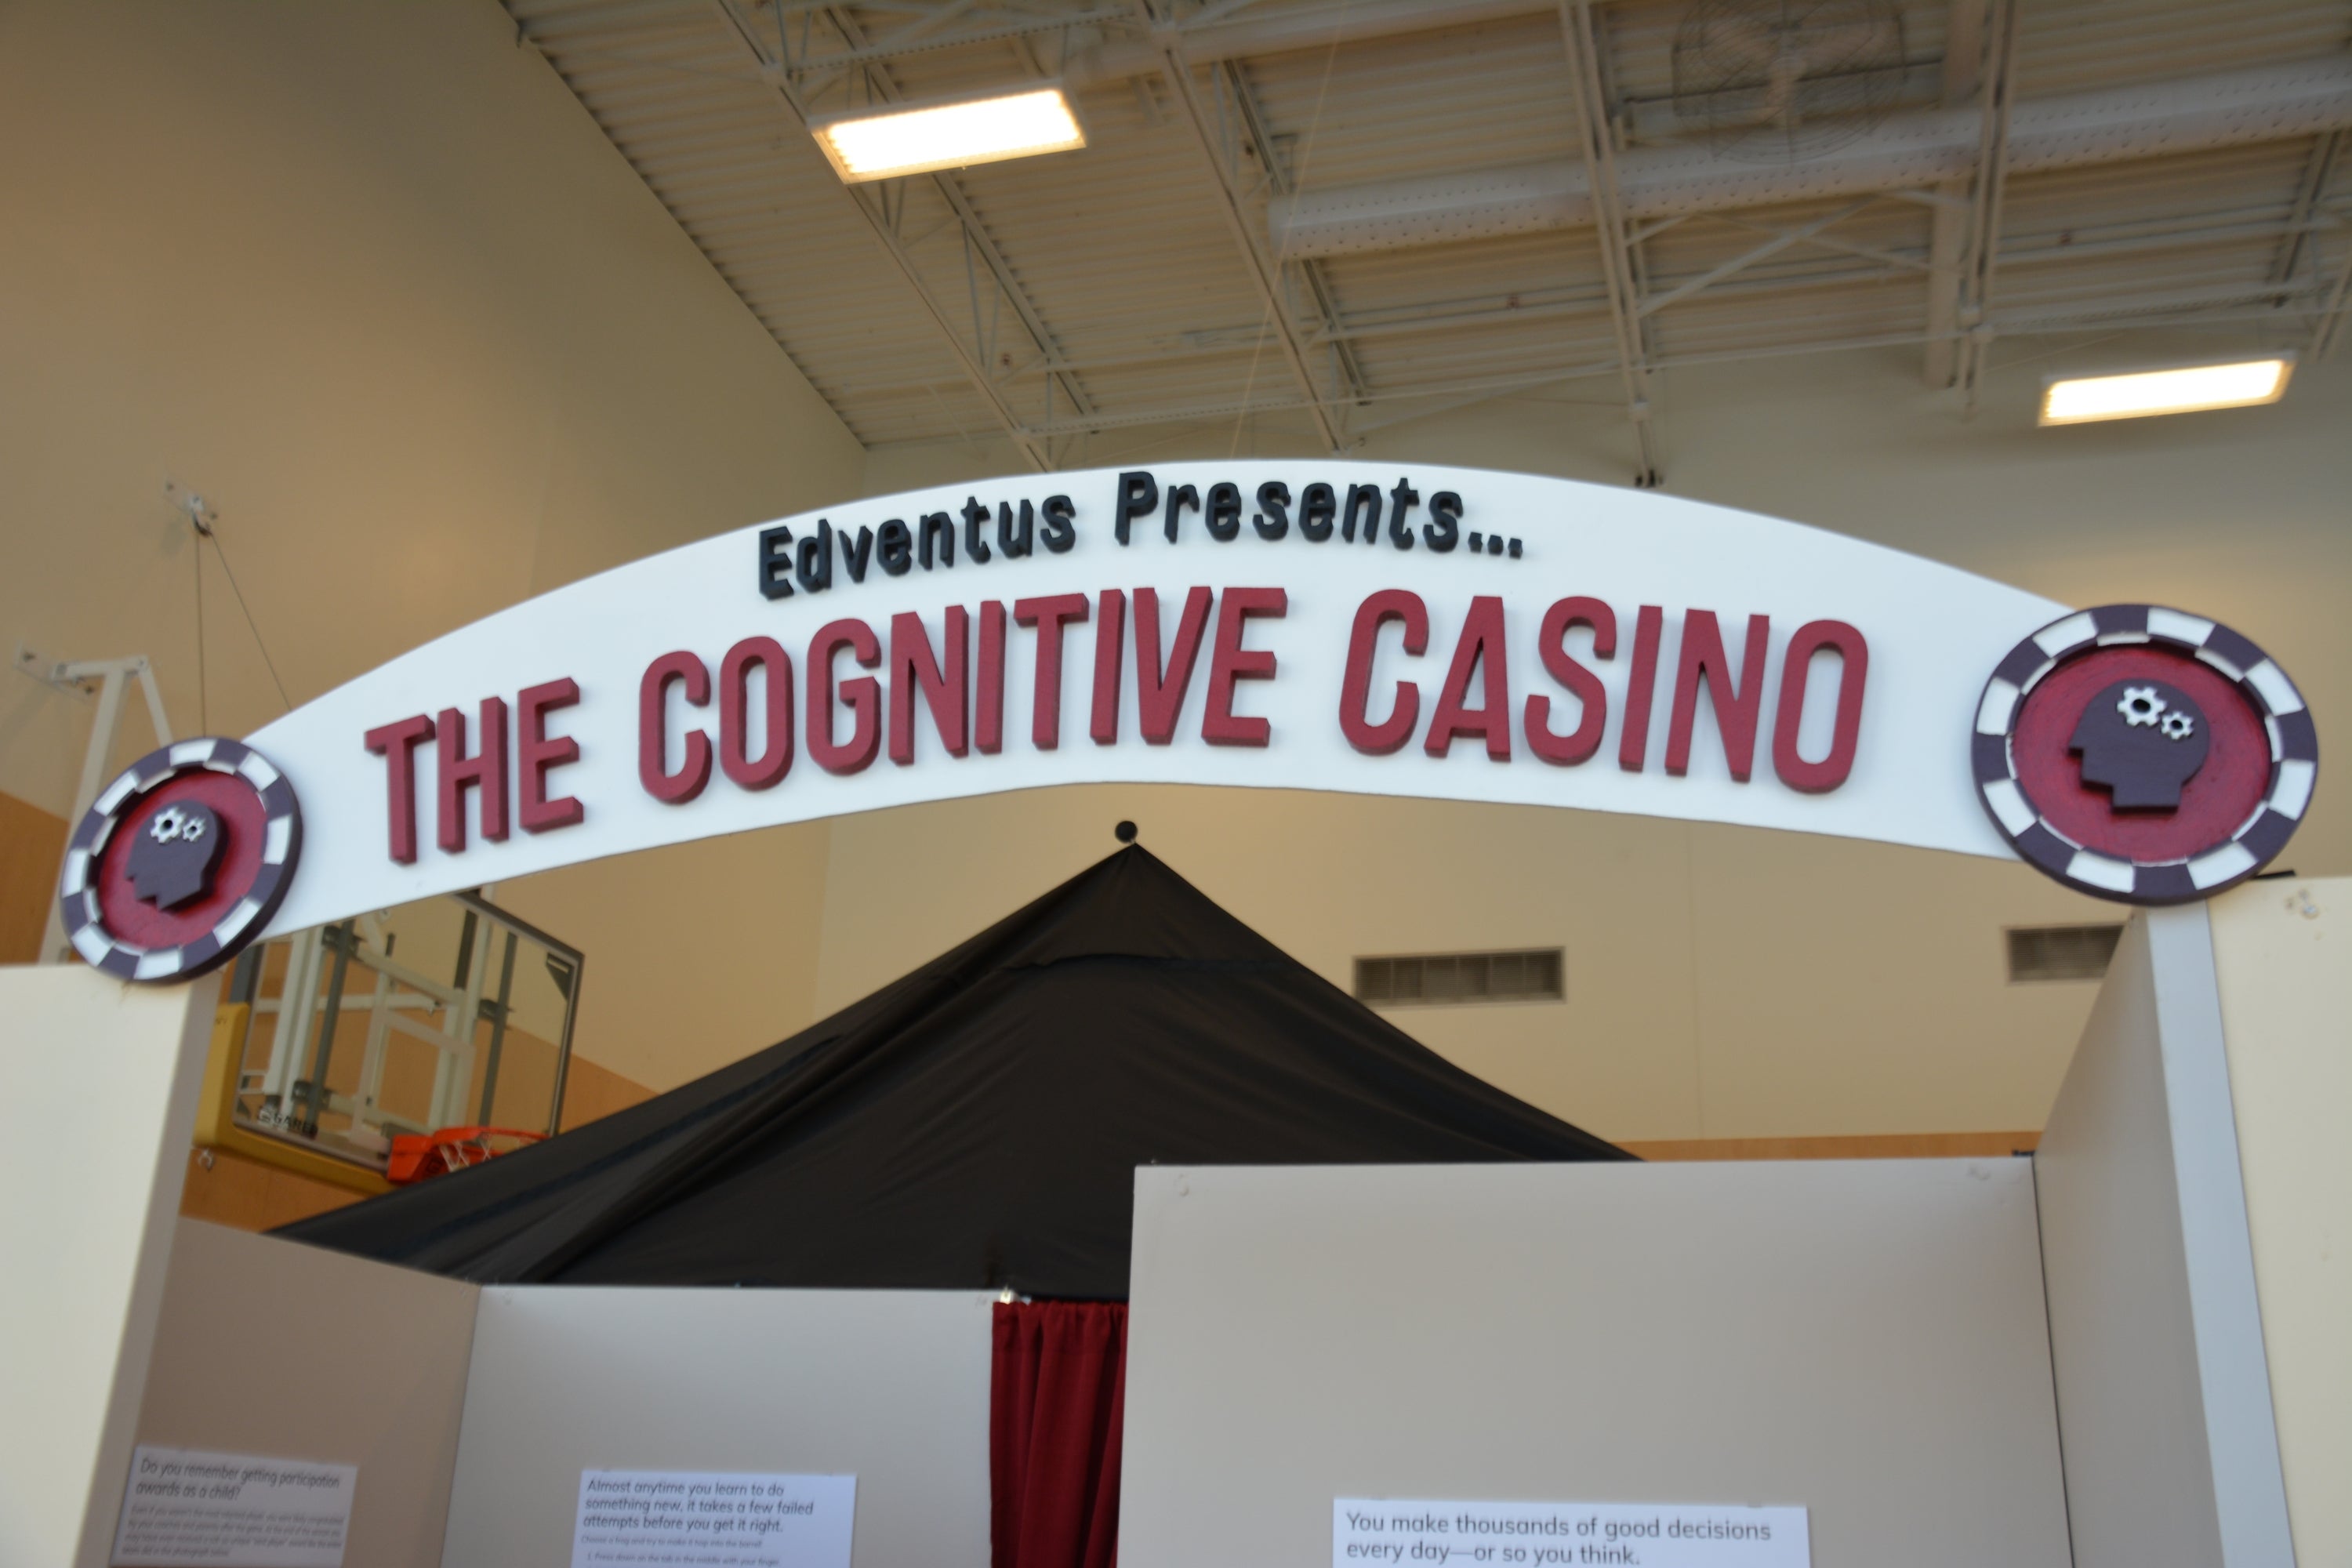 "Edventus Presents... The Cognitive Casino" overhead sign.